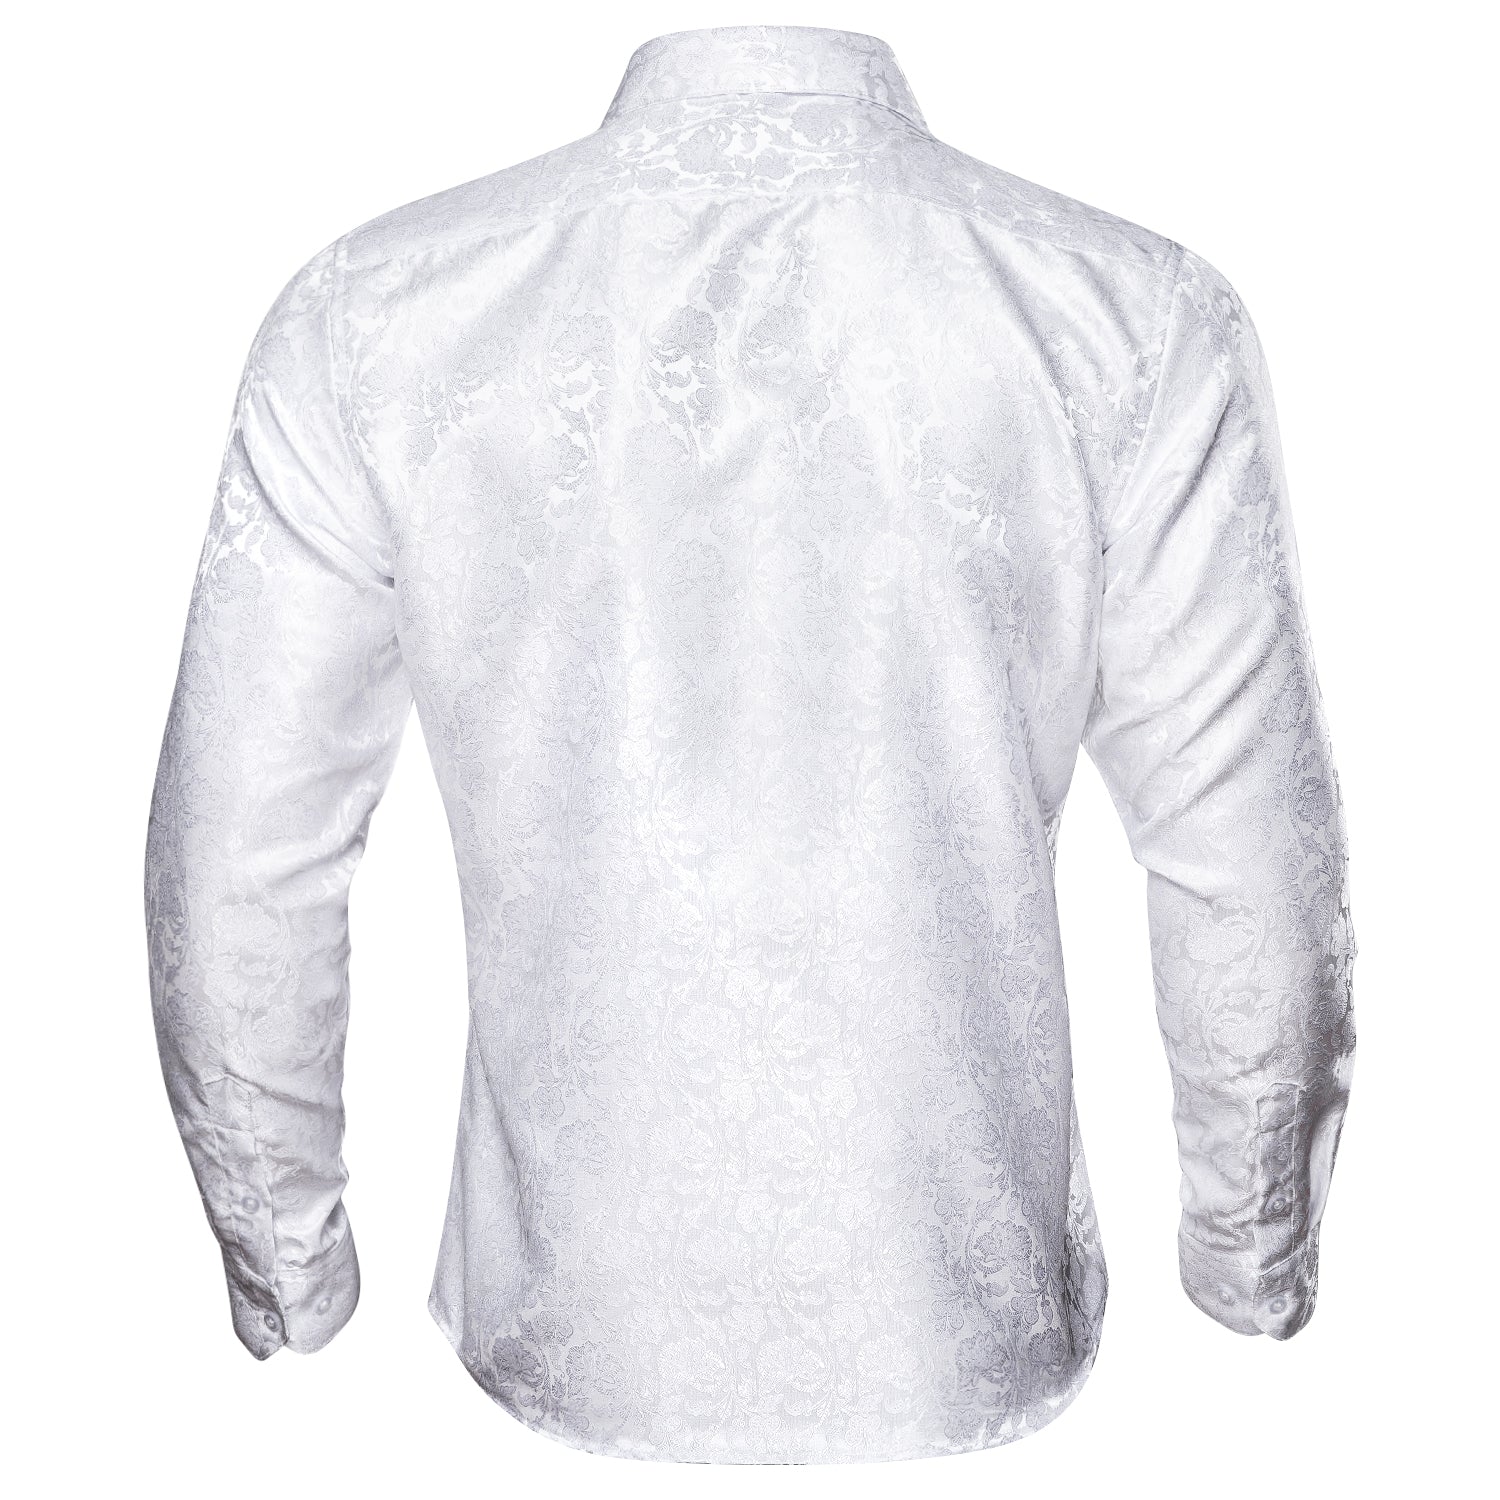 Barry.wang White Paisley Silk Men's Shirt